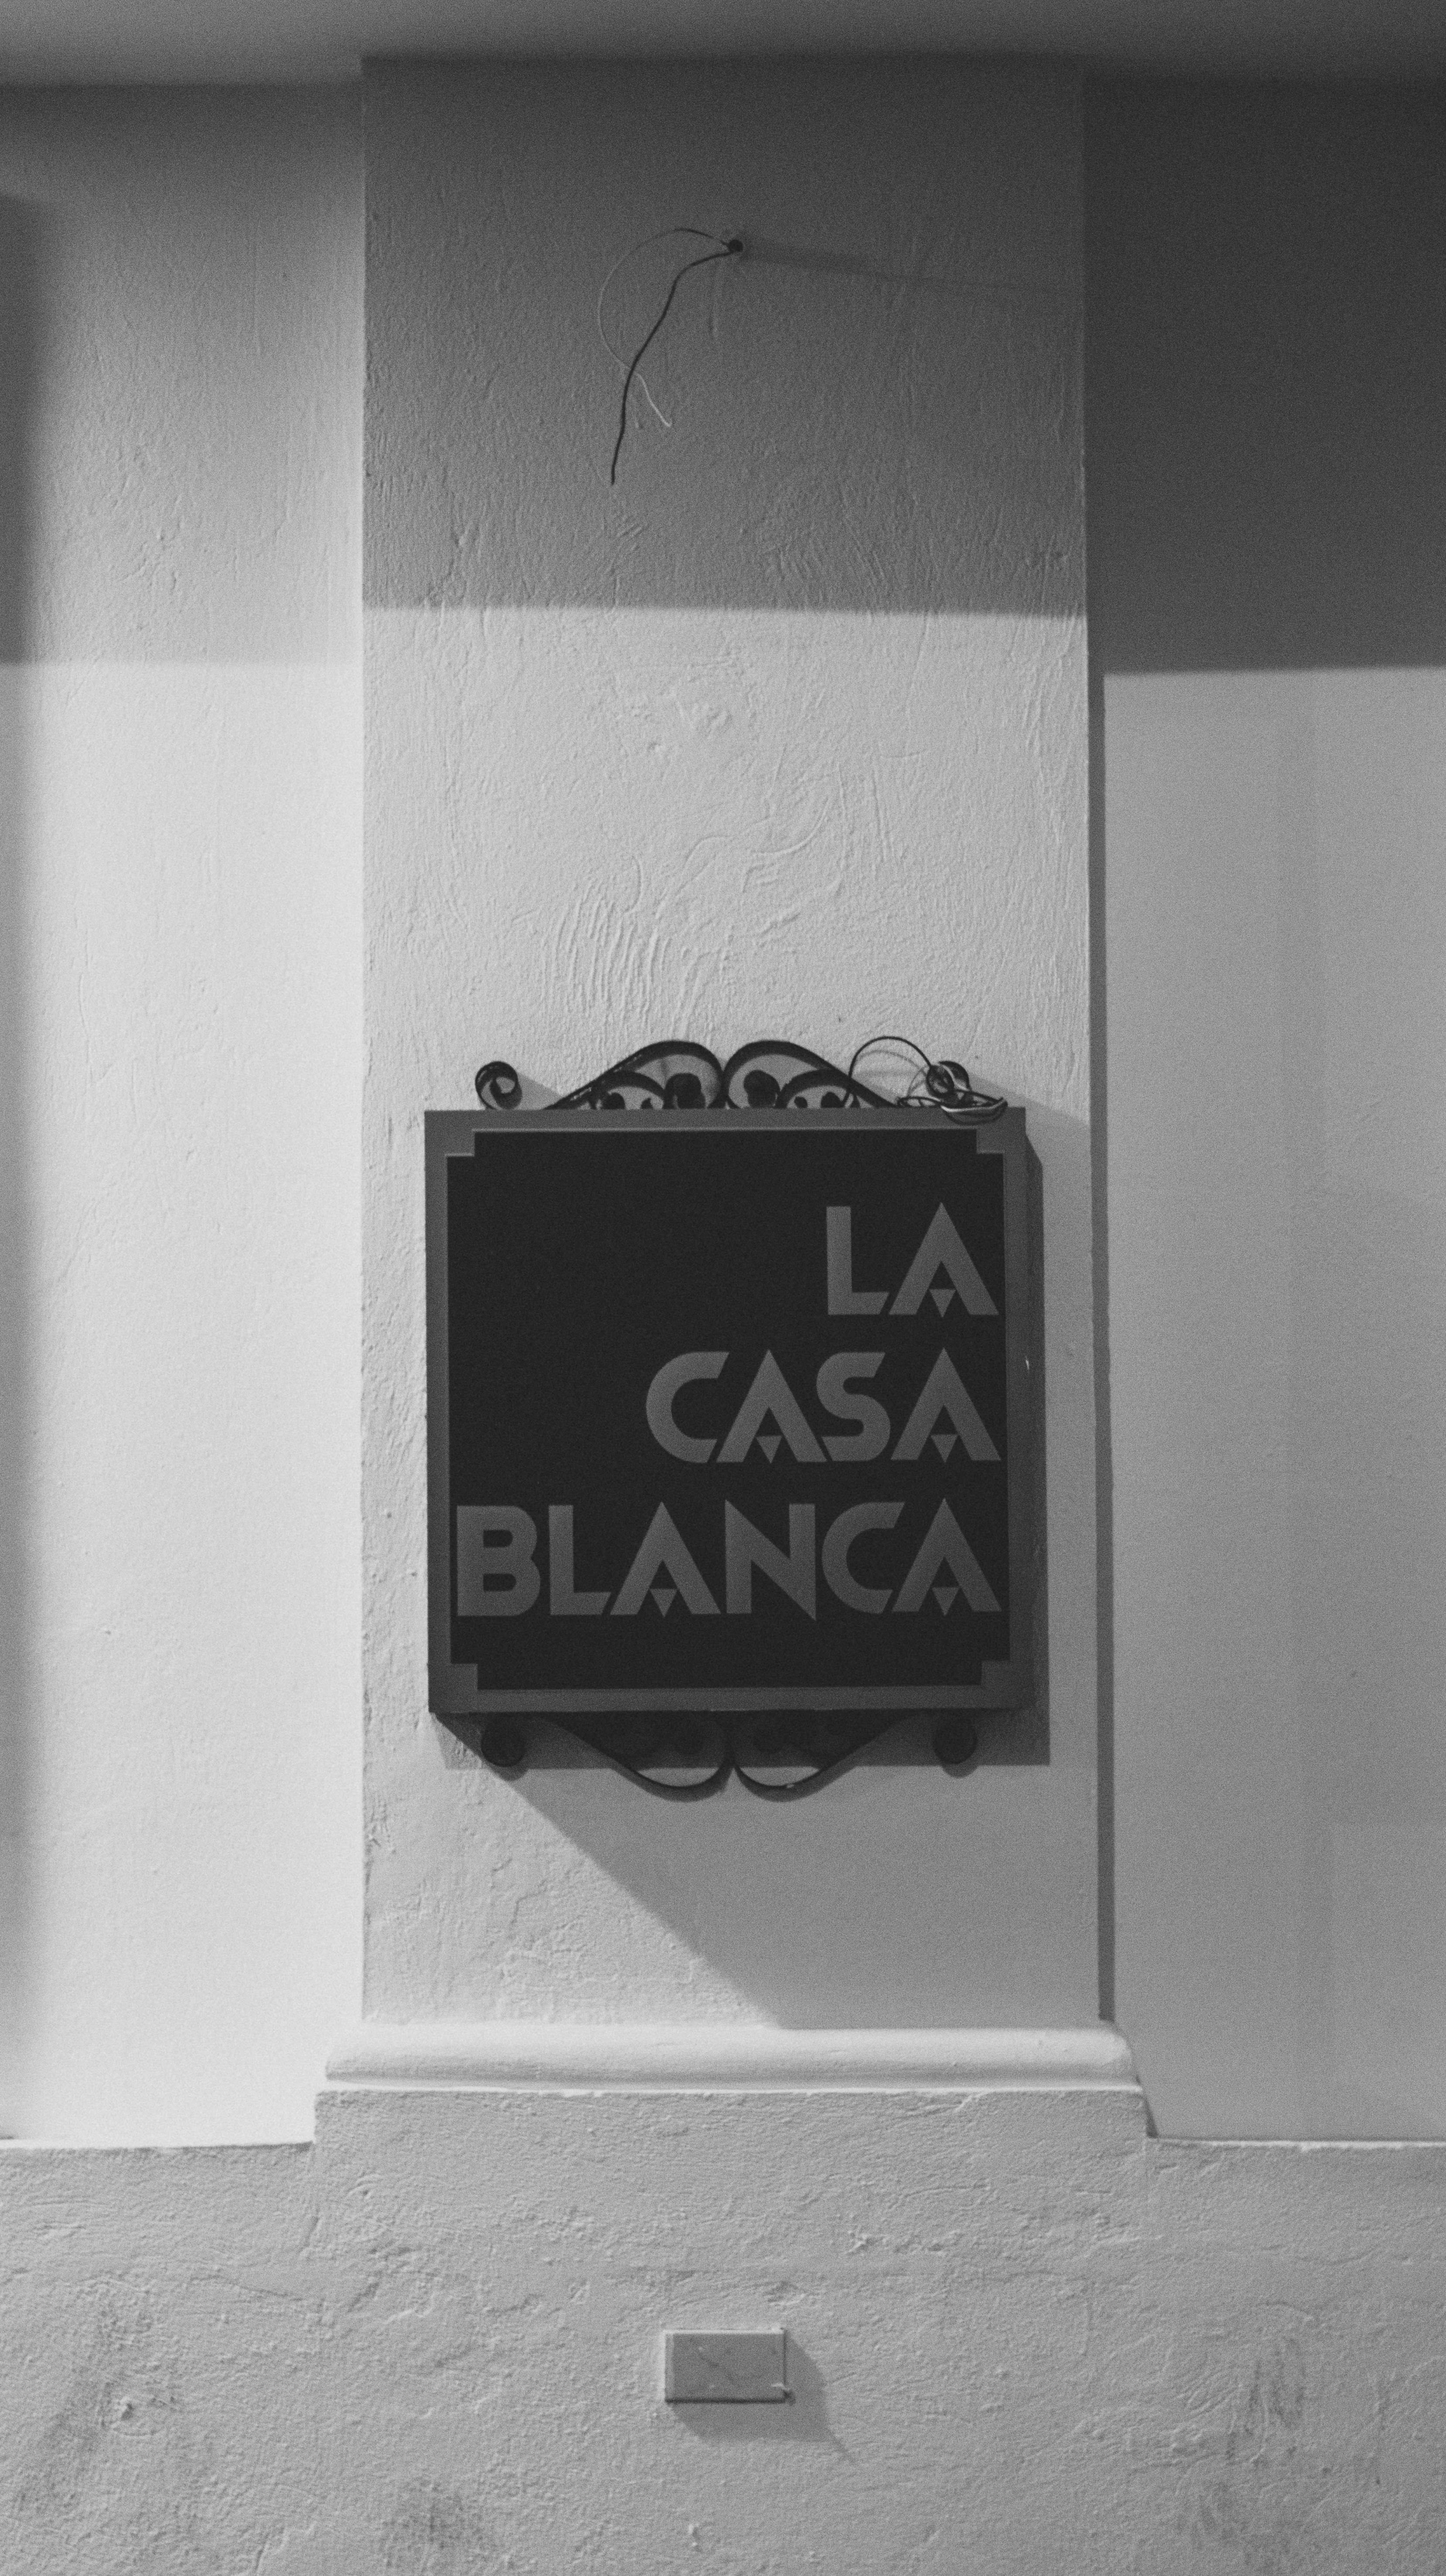 monochrome shot of a la casa blanca signage on a wall